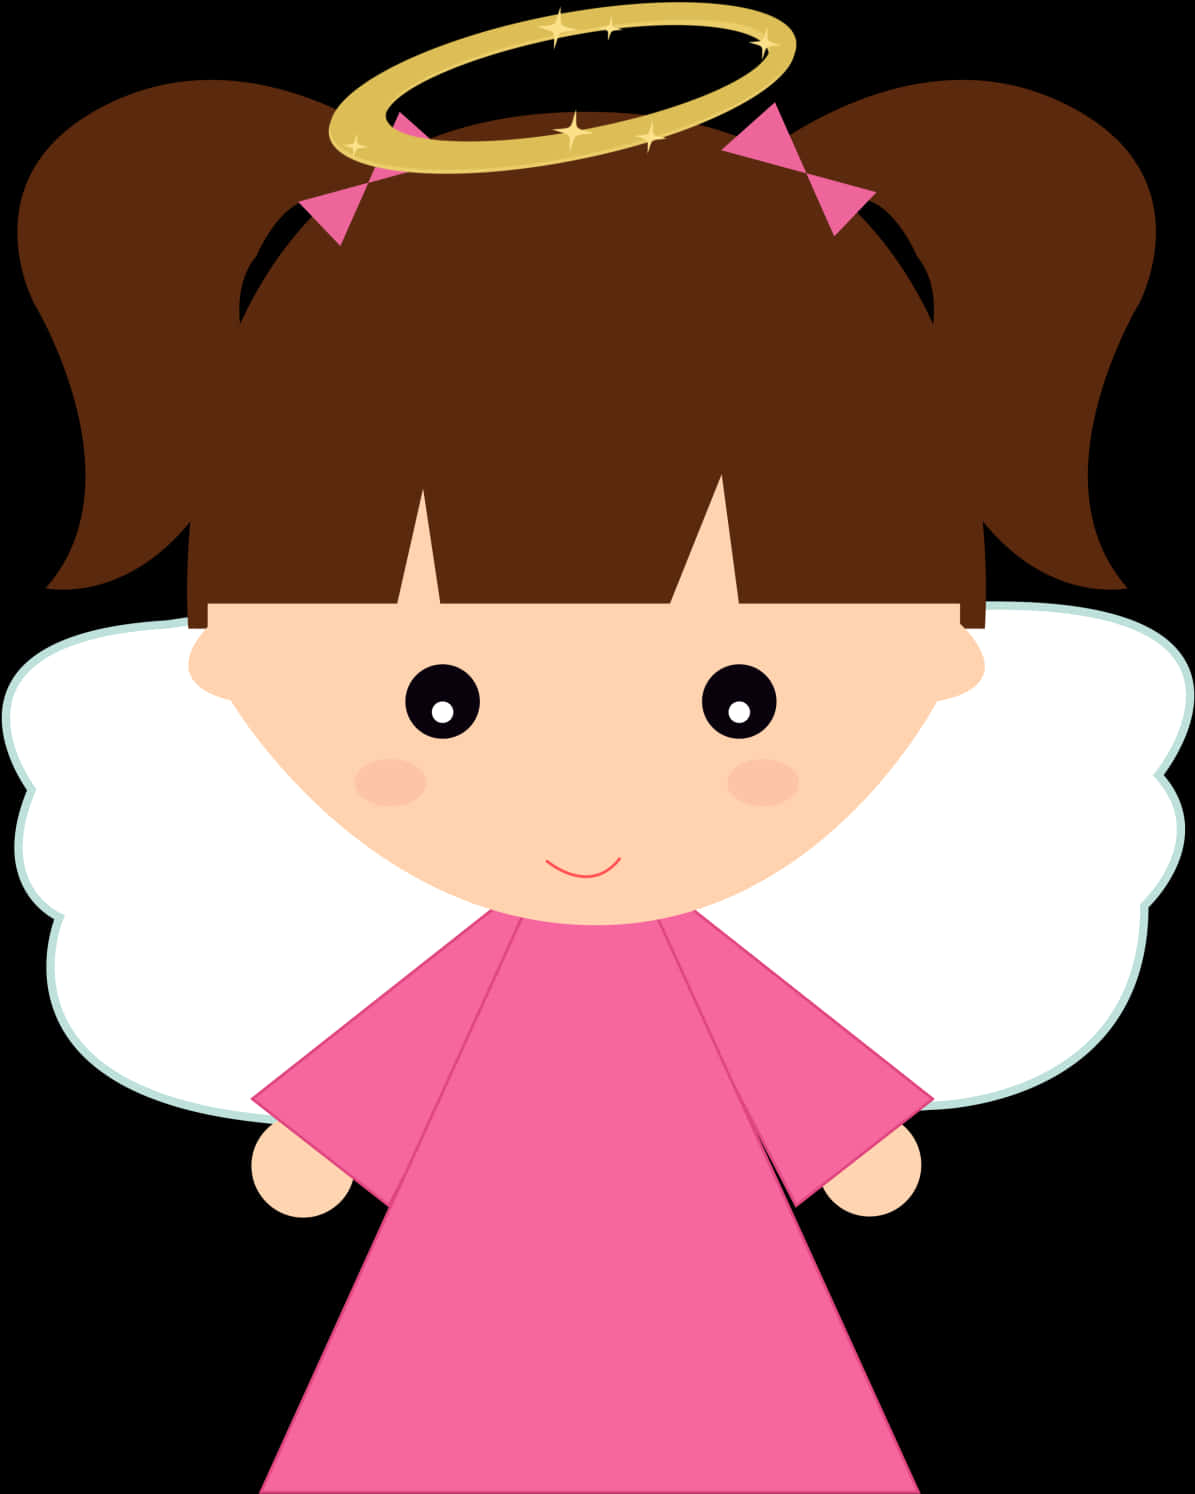 Angel Cartoon Girl Illustration PNG image